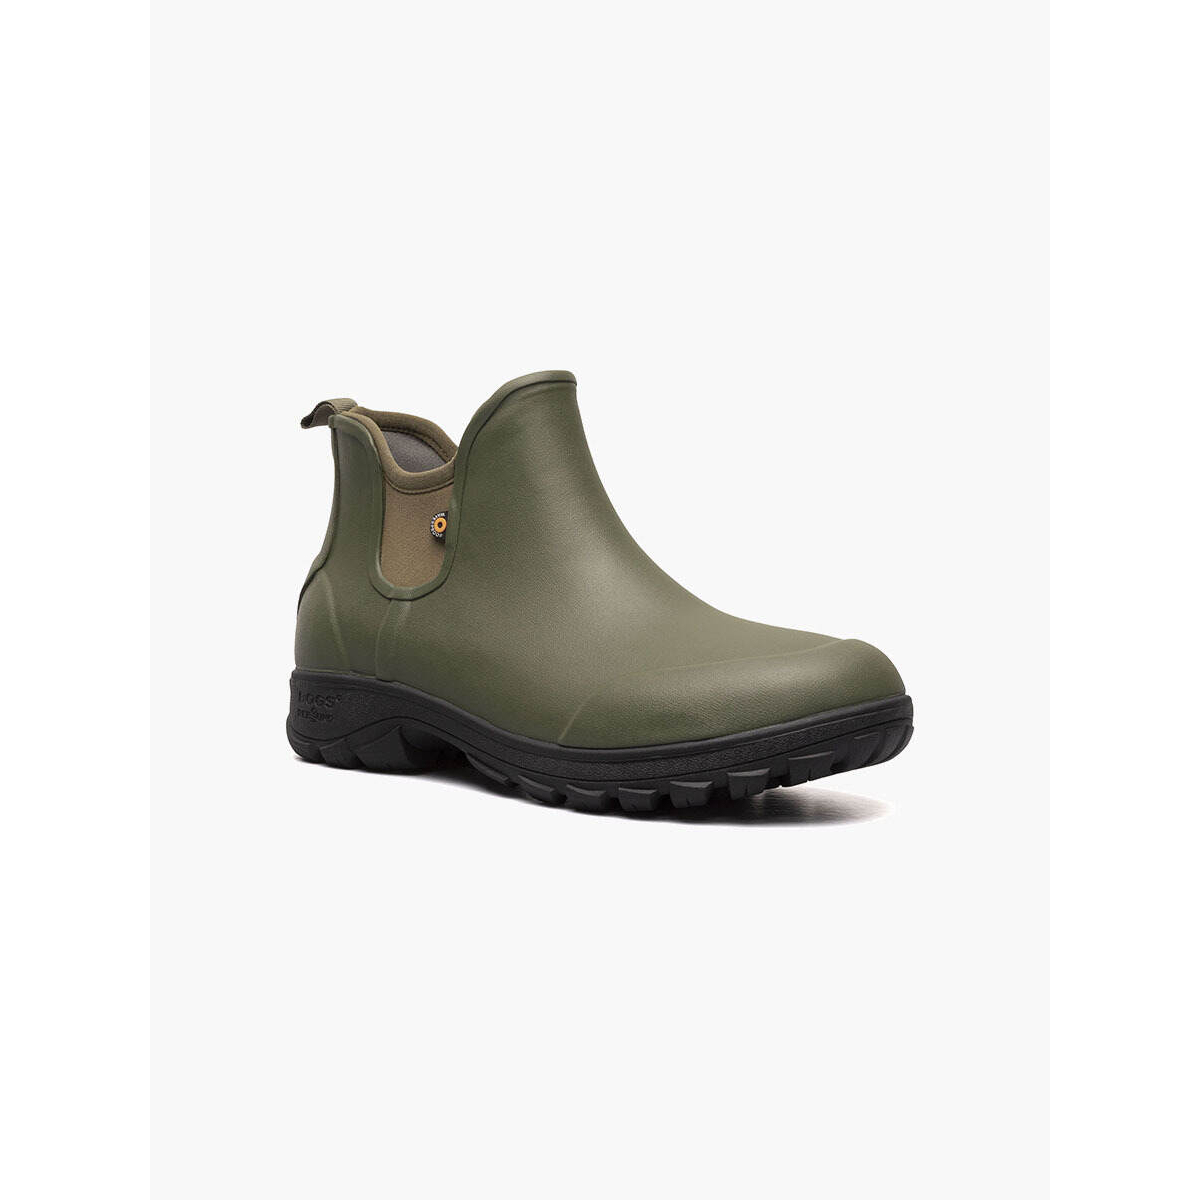 BOGS Men's Sauvie Slip On Insulated Waterproof Rain Boot Olive Multi - 72208-302 - OLIVE MLTI, 14